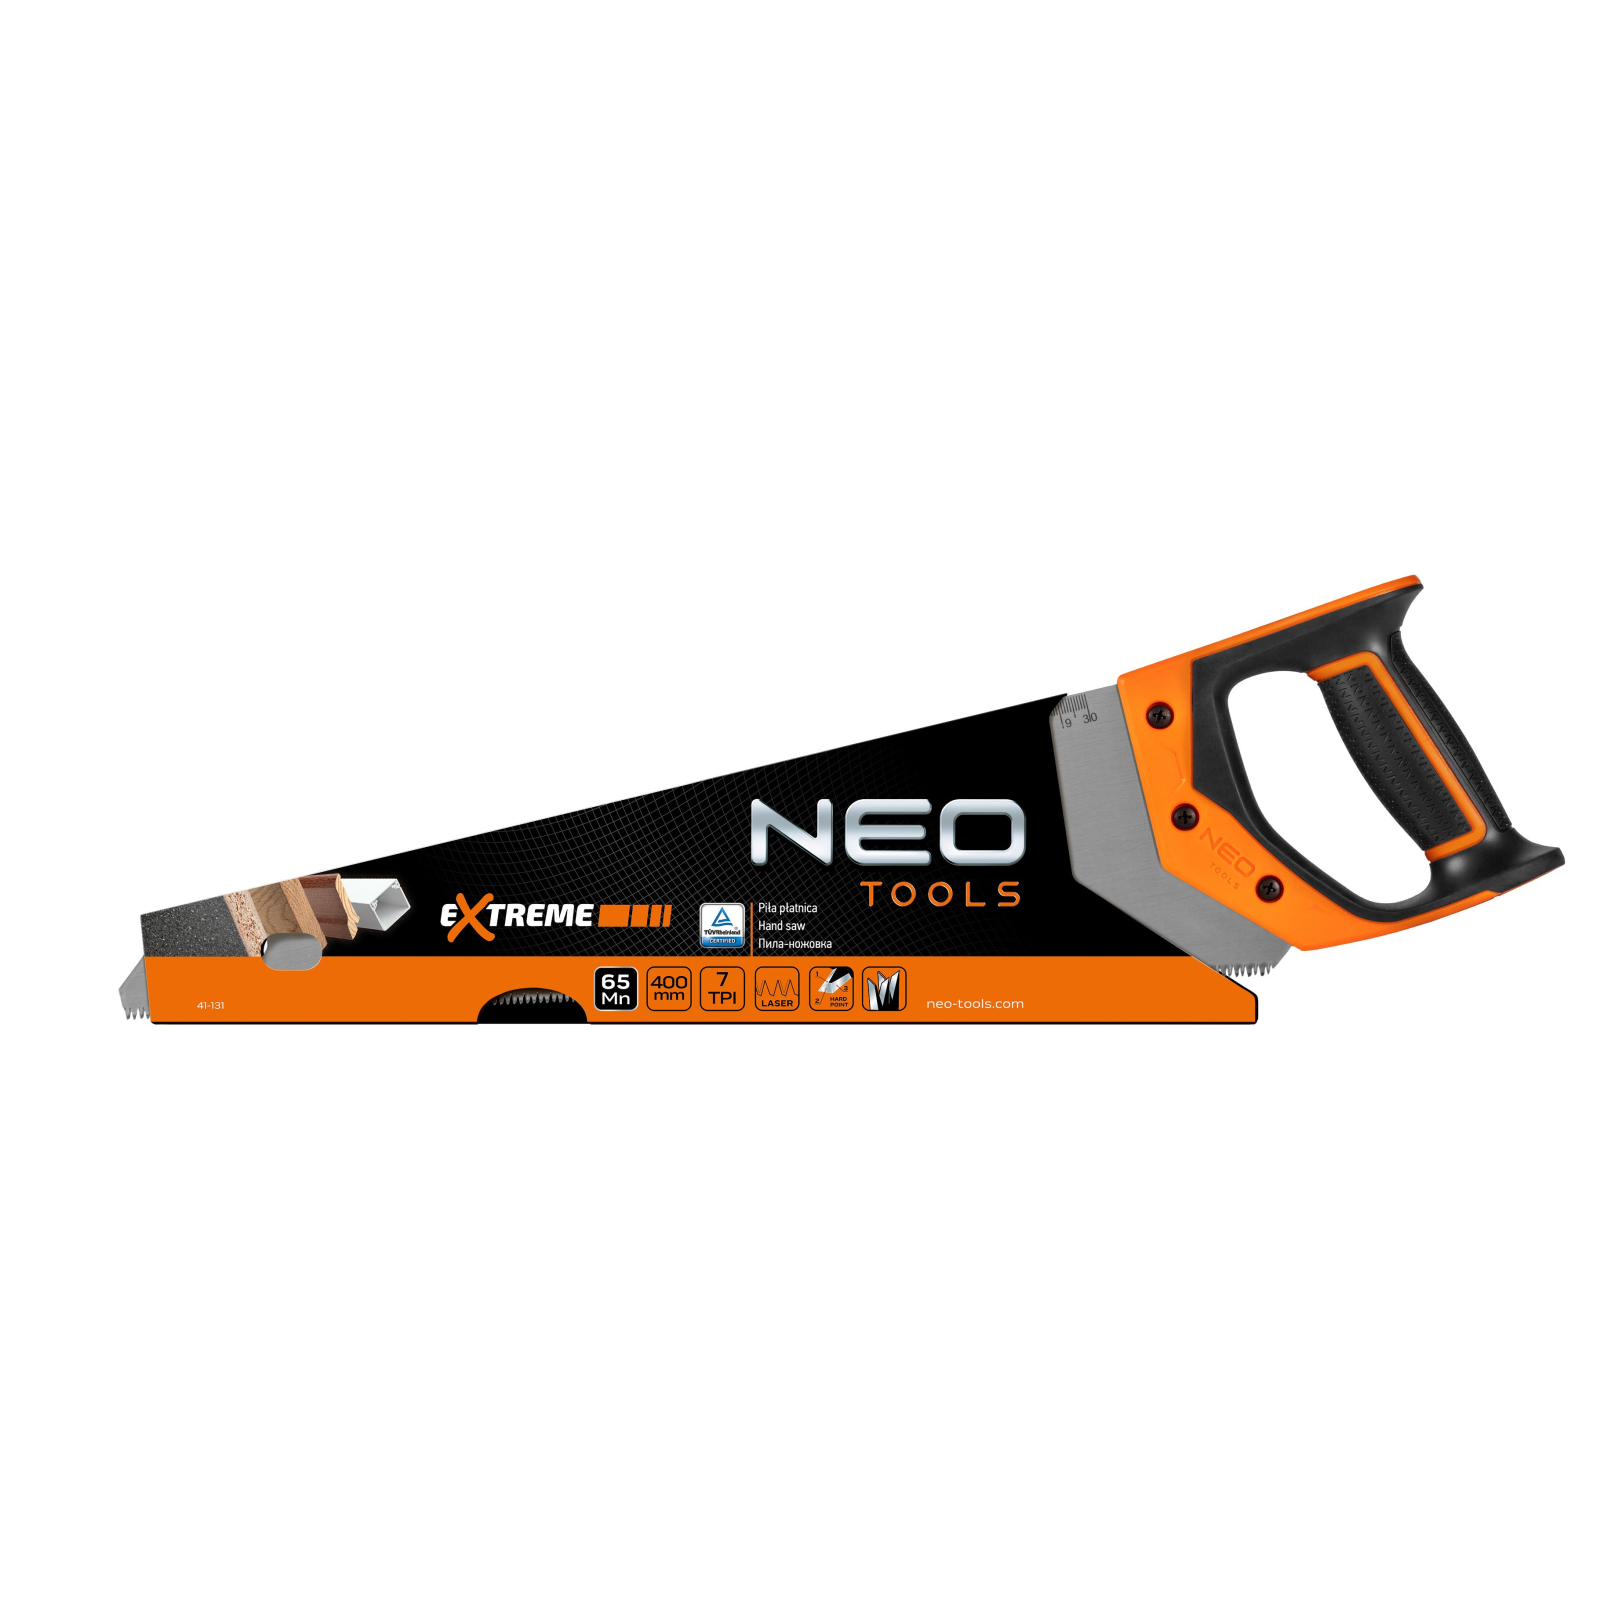 Ножовка Neo Tools по дереву, Extreme, 450 мм, 7TPI (41-136) изображение 4